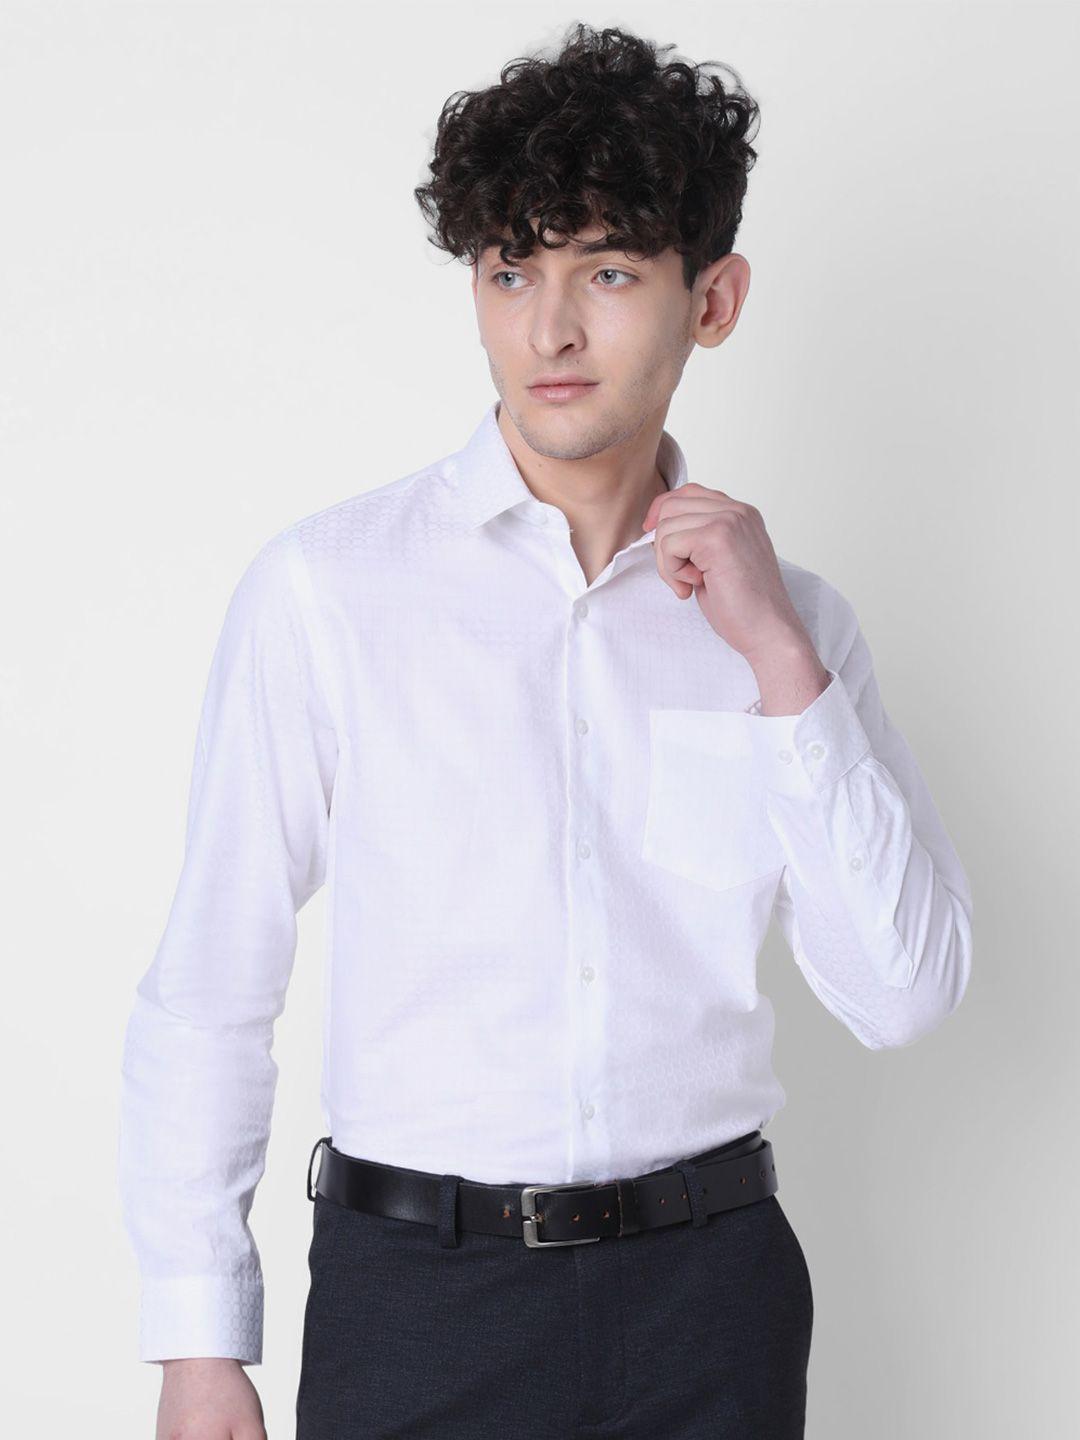 j hampstead classic opaque self design formal shirt